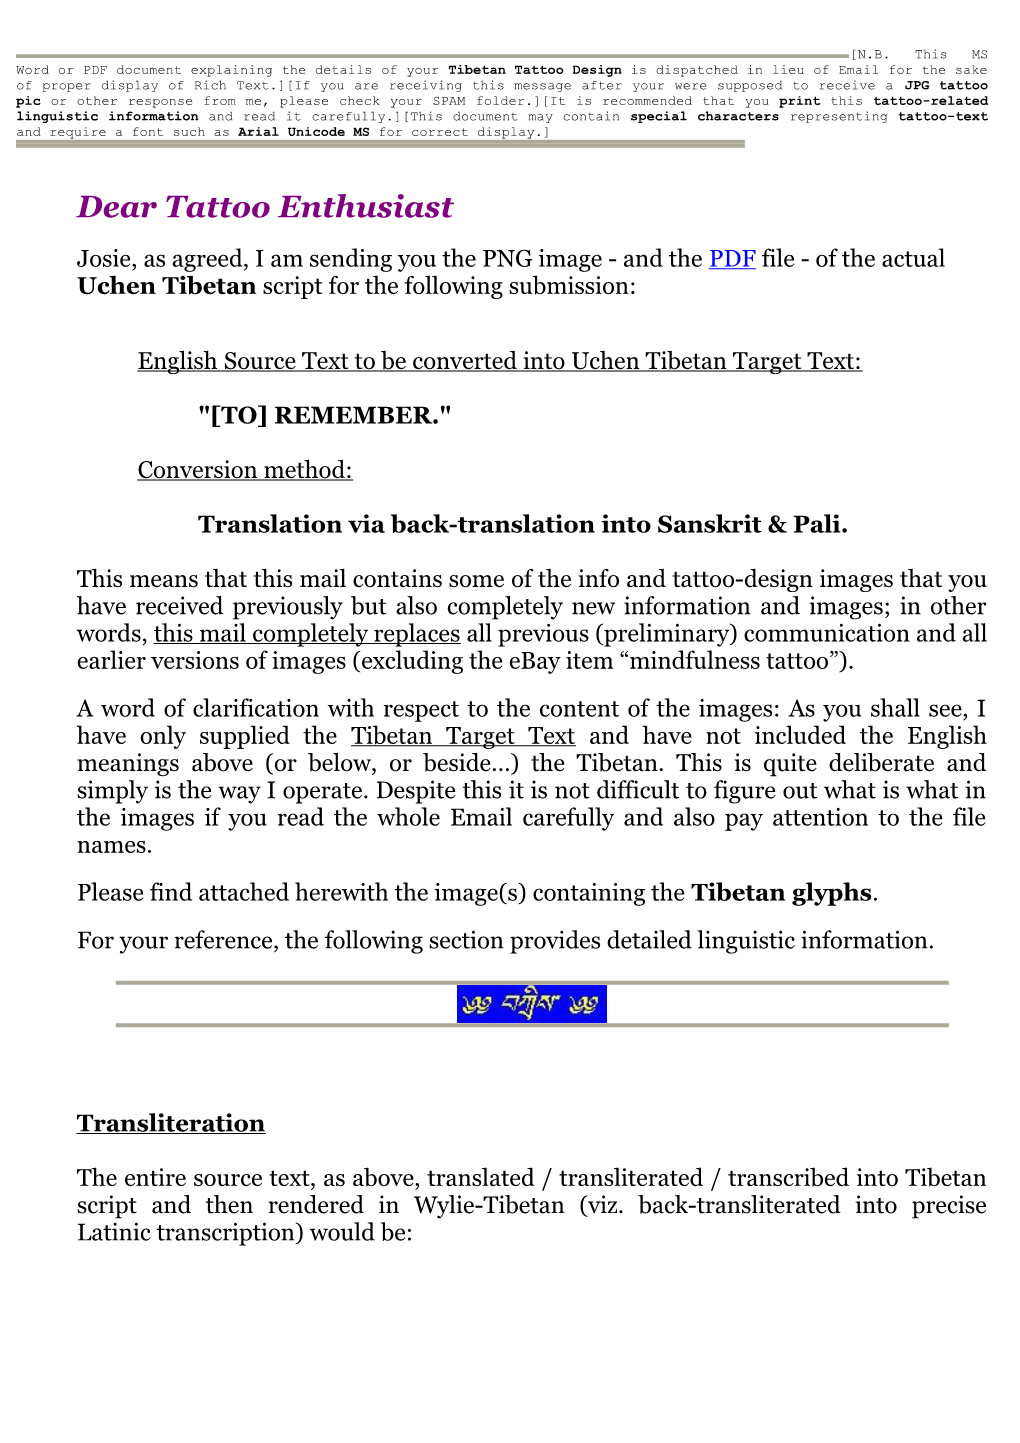 Translation Via Back-Translation Into Sanskrit & Pali